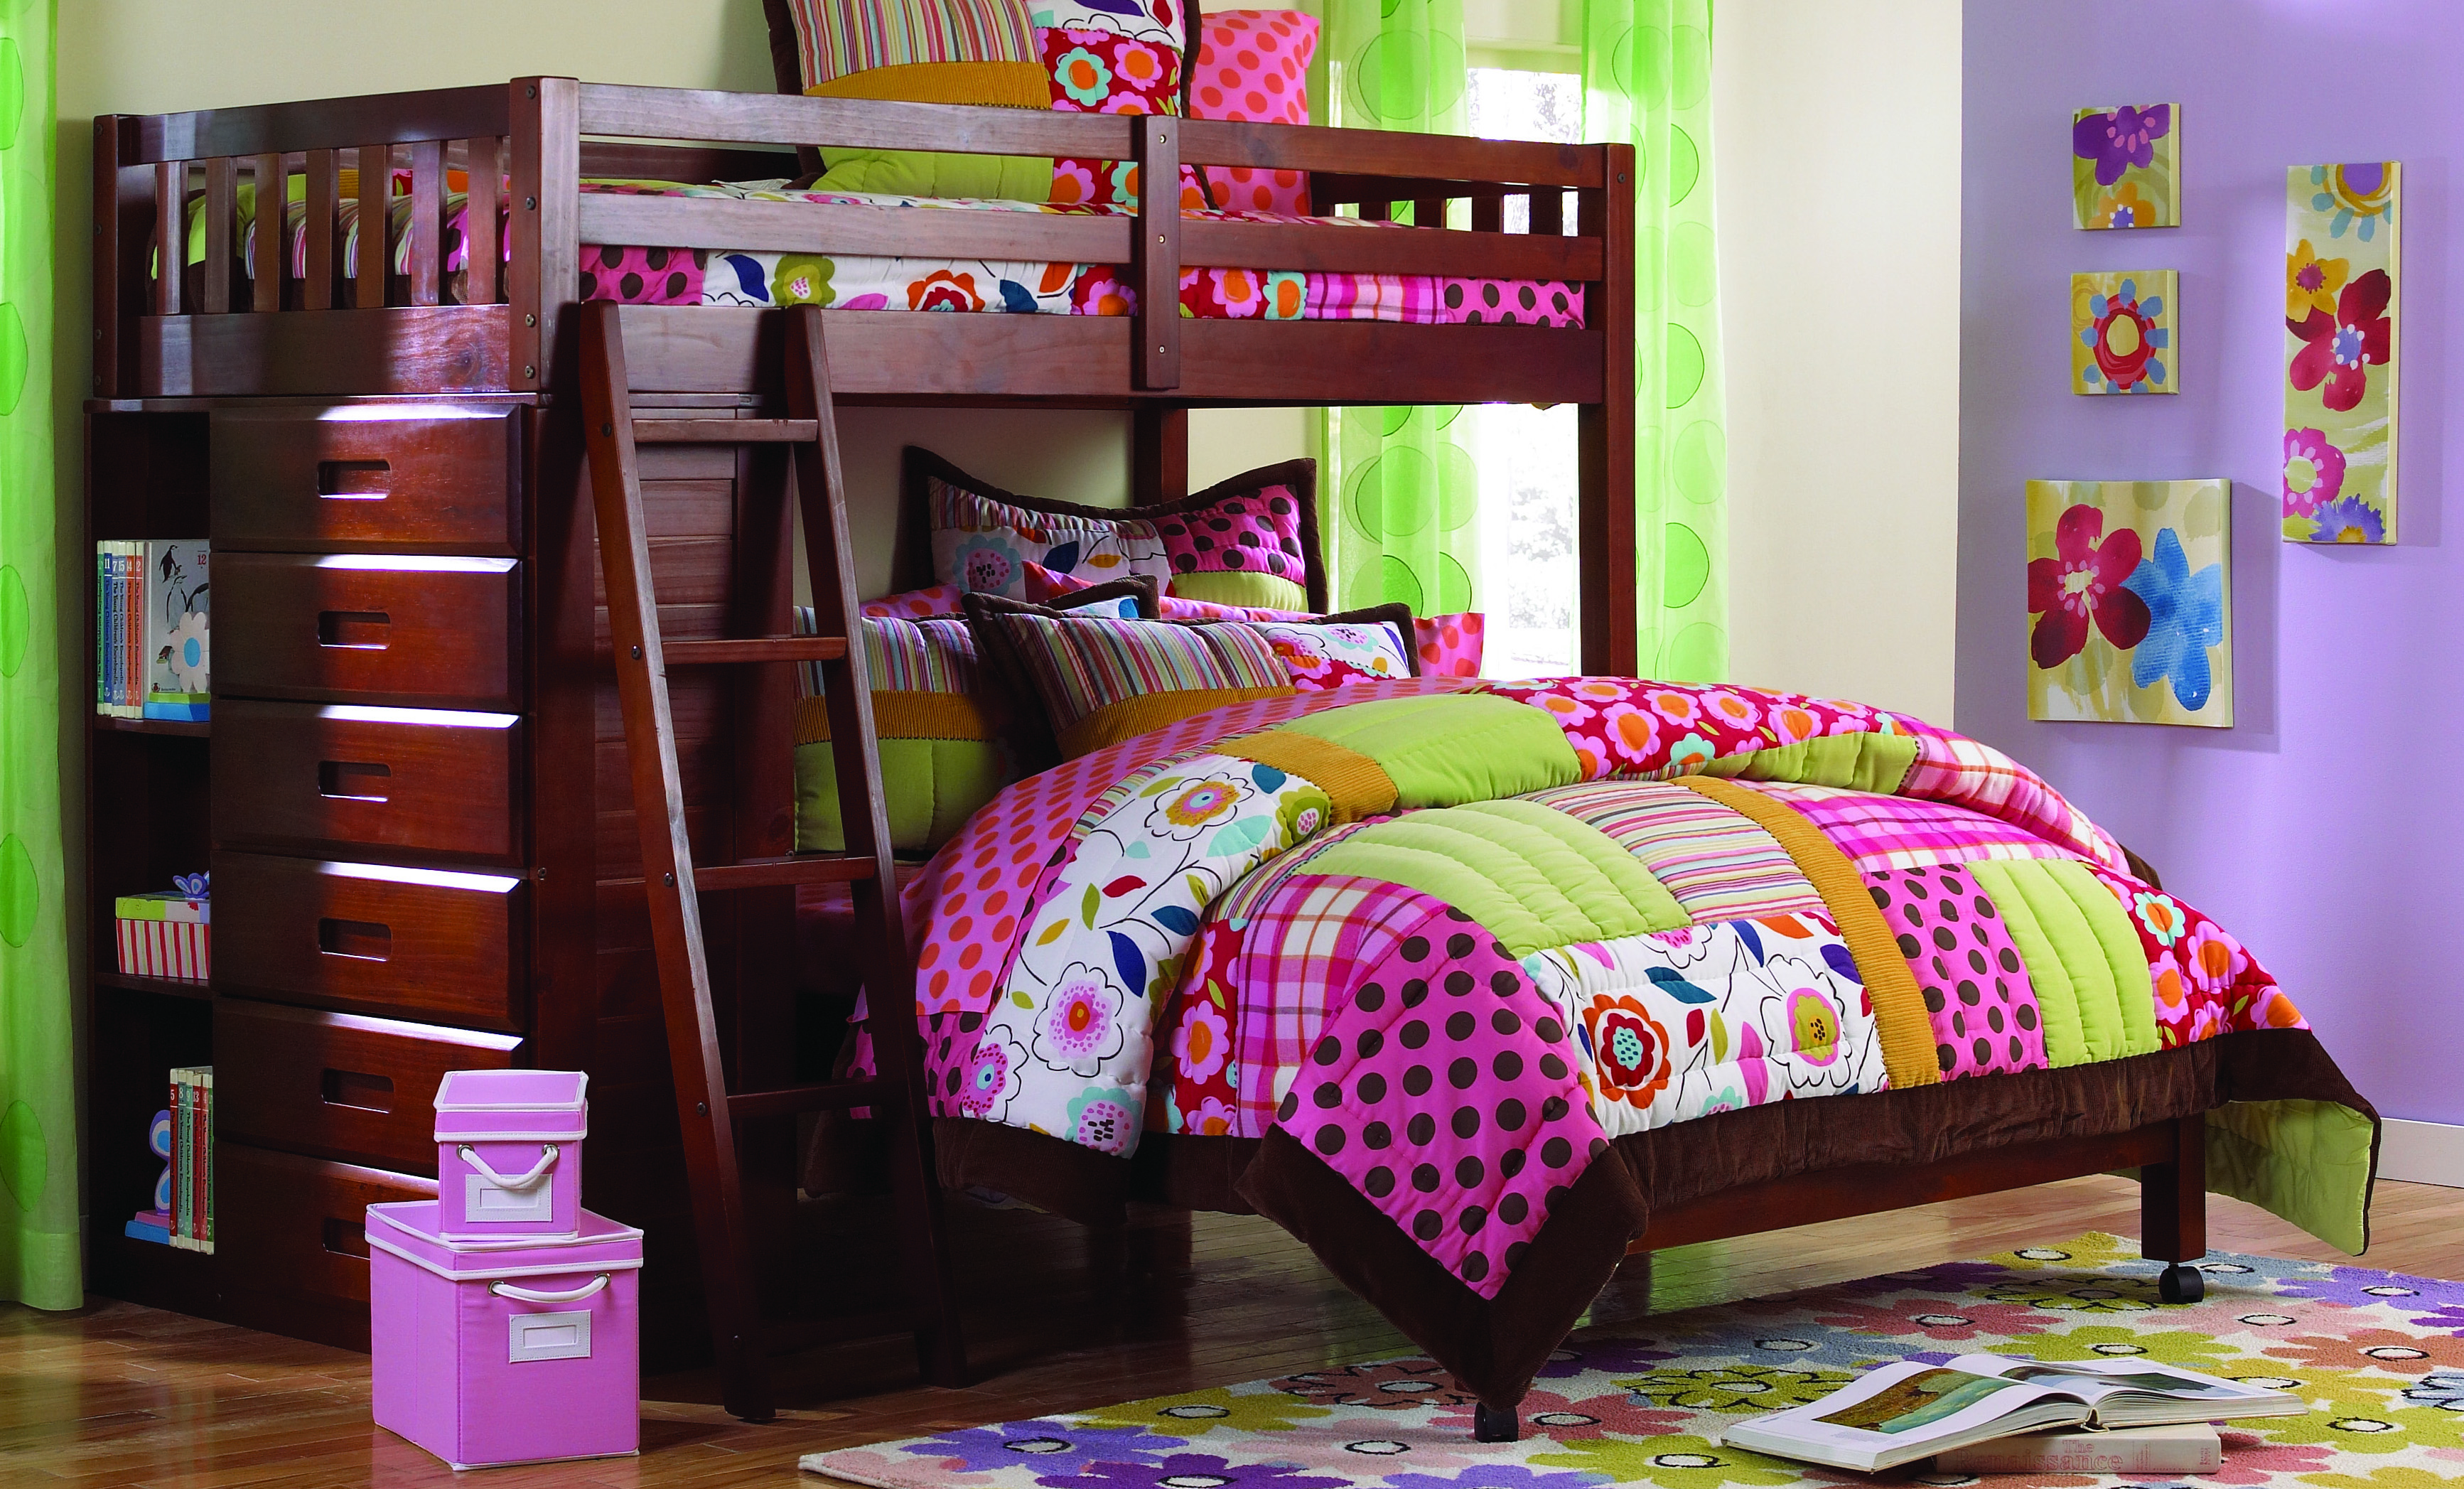 Merlot Loft Bunk Bed Bedroom Sets, Wooden Bunk Bed Kors With Trundle And Storage